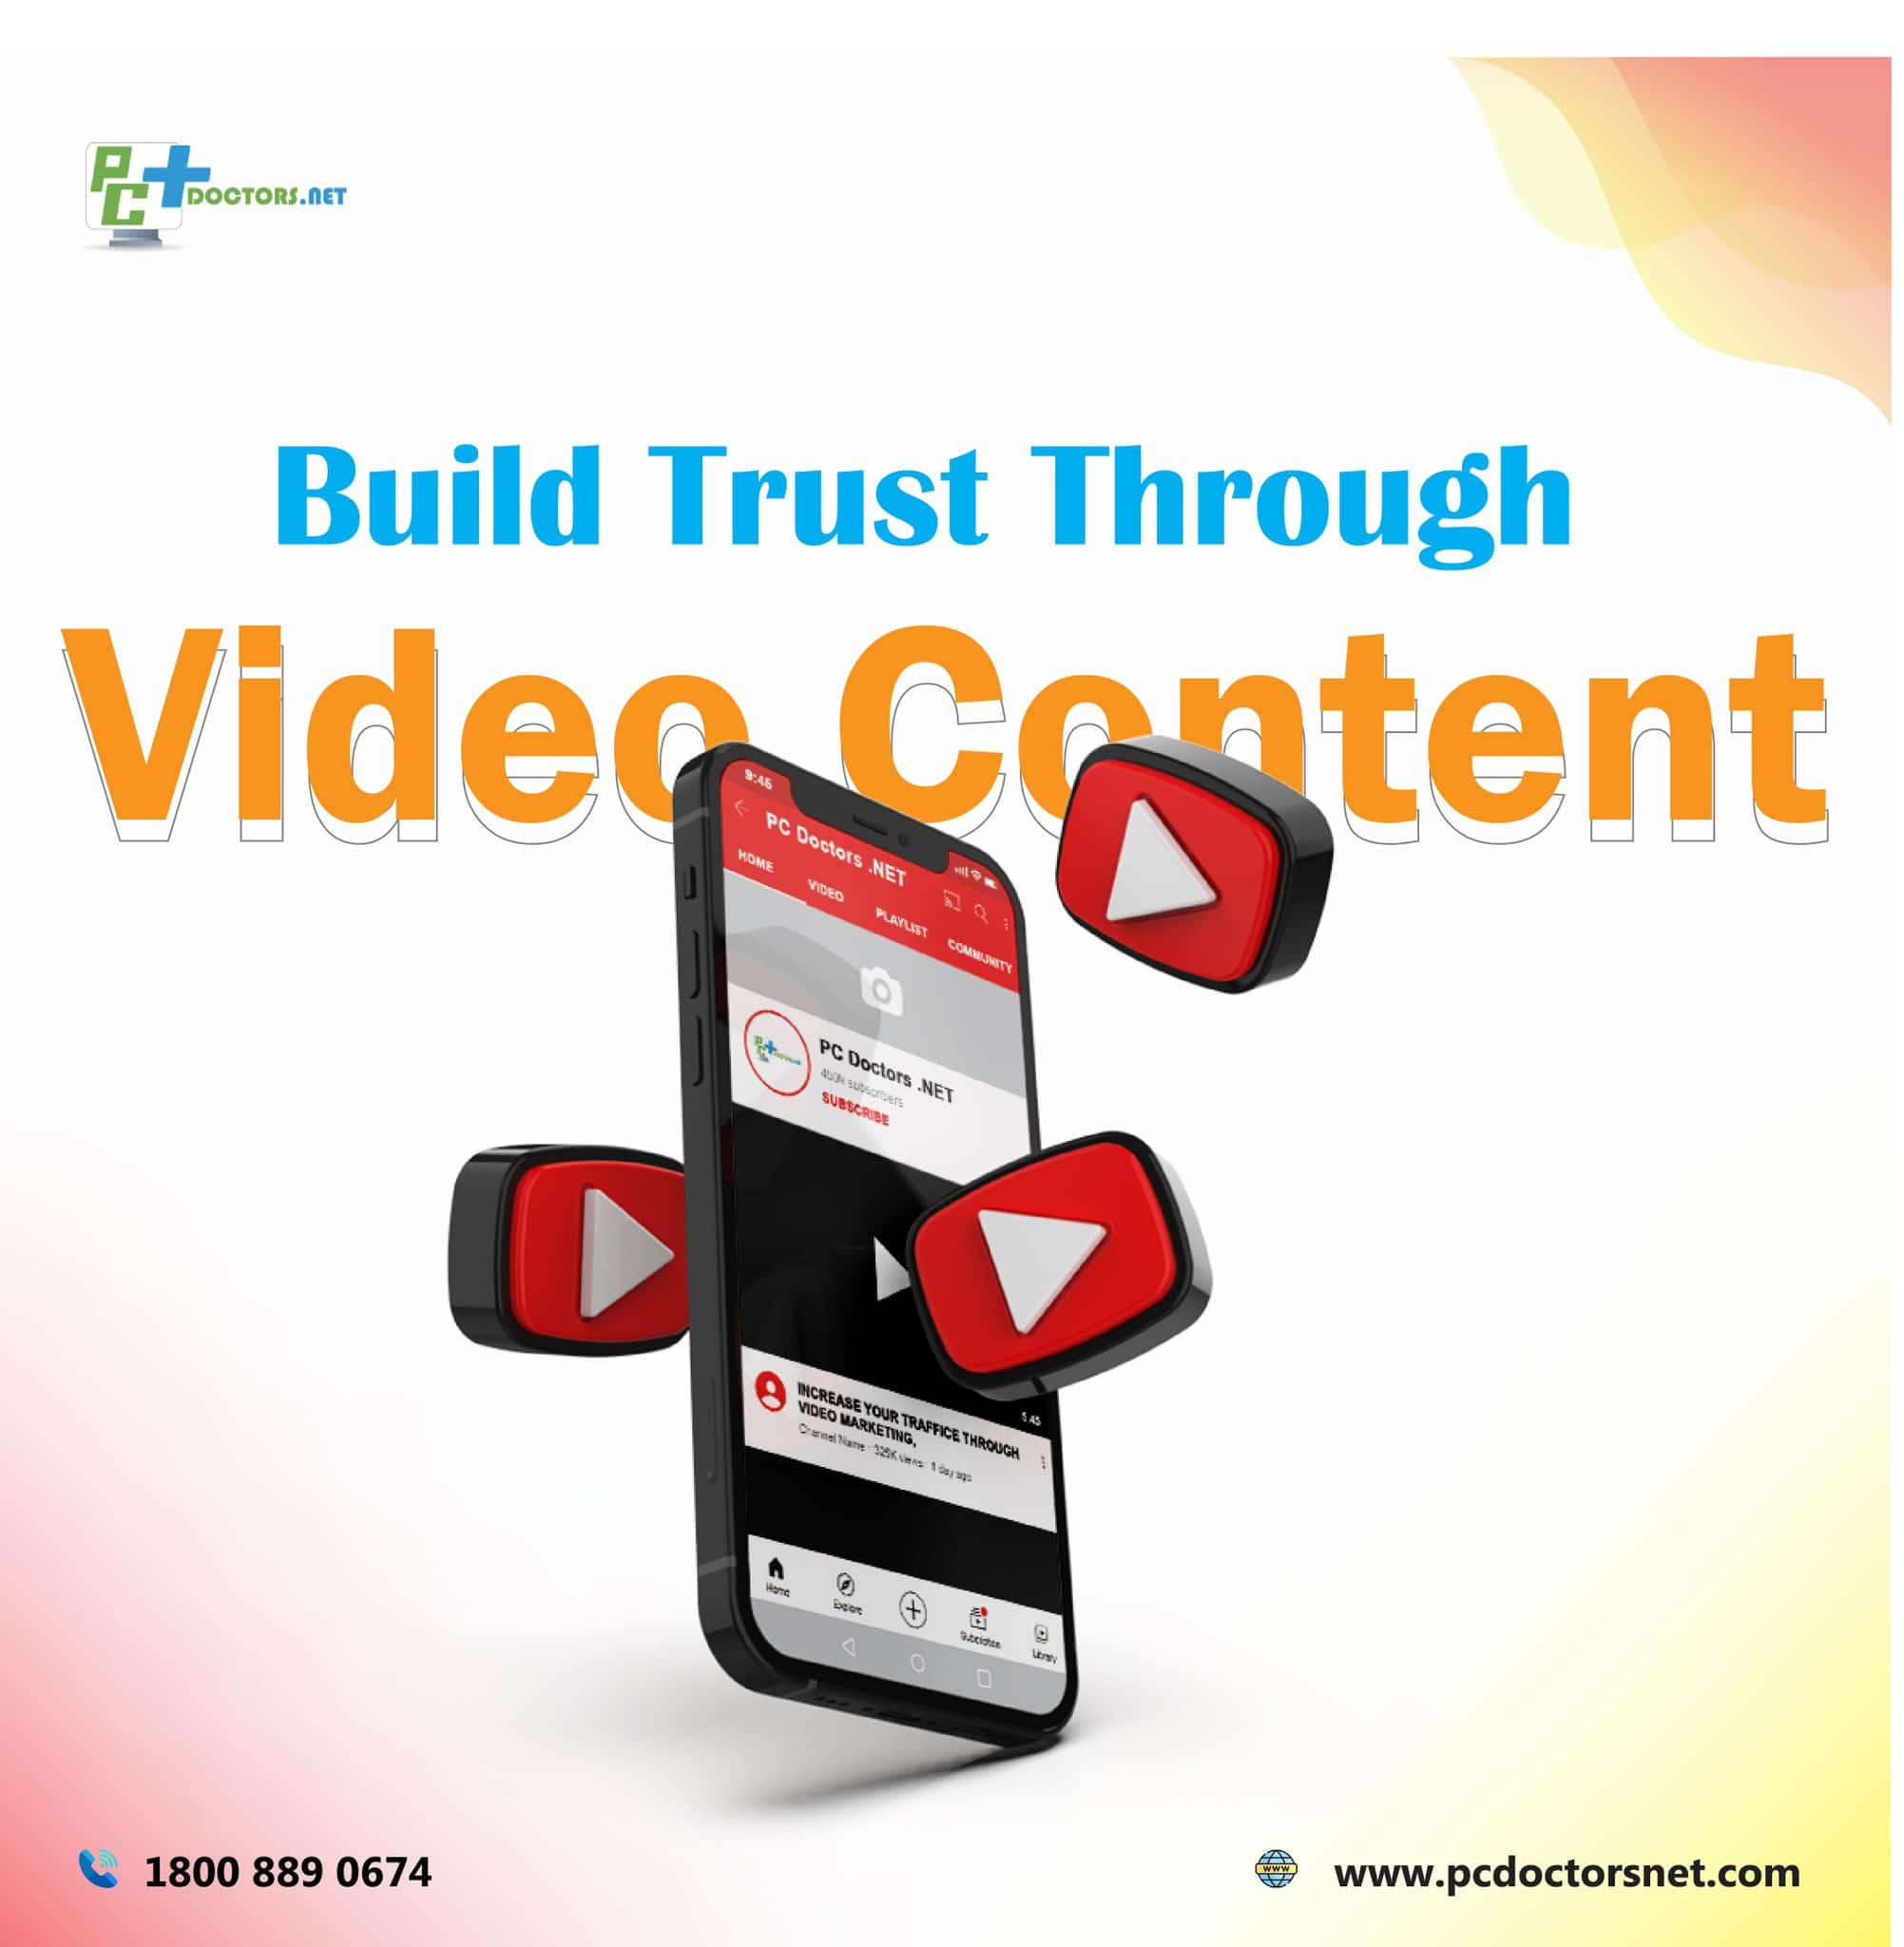 Video content